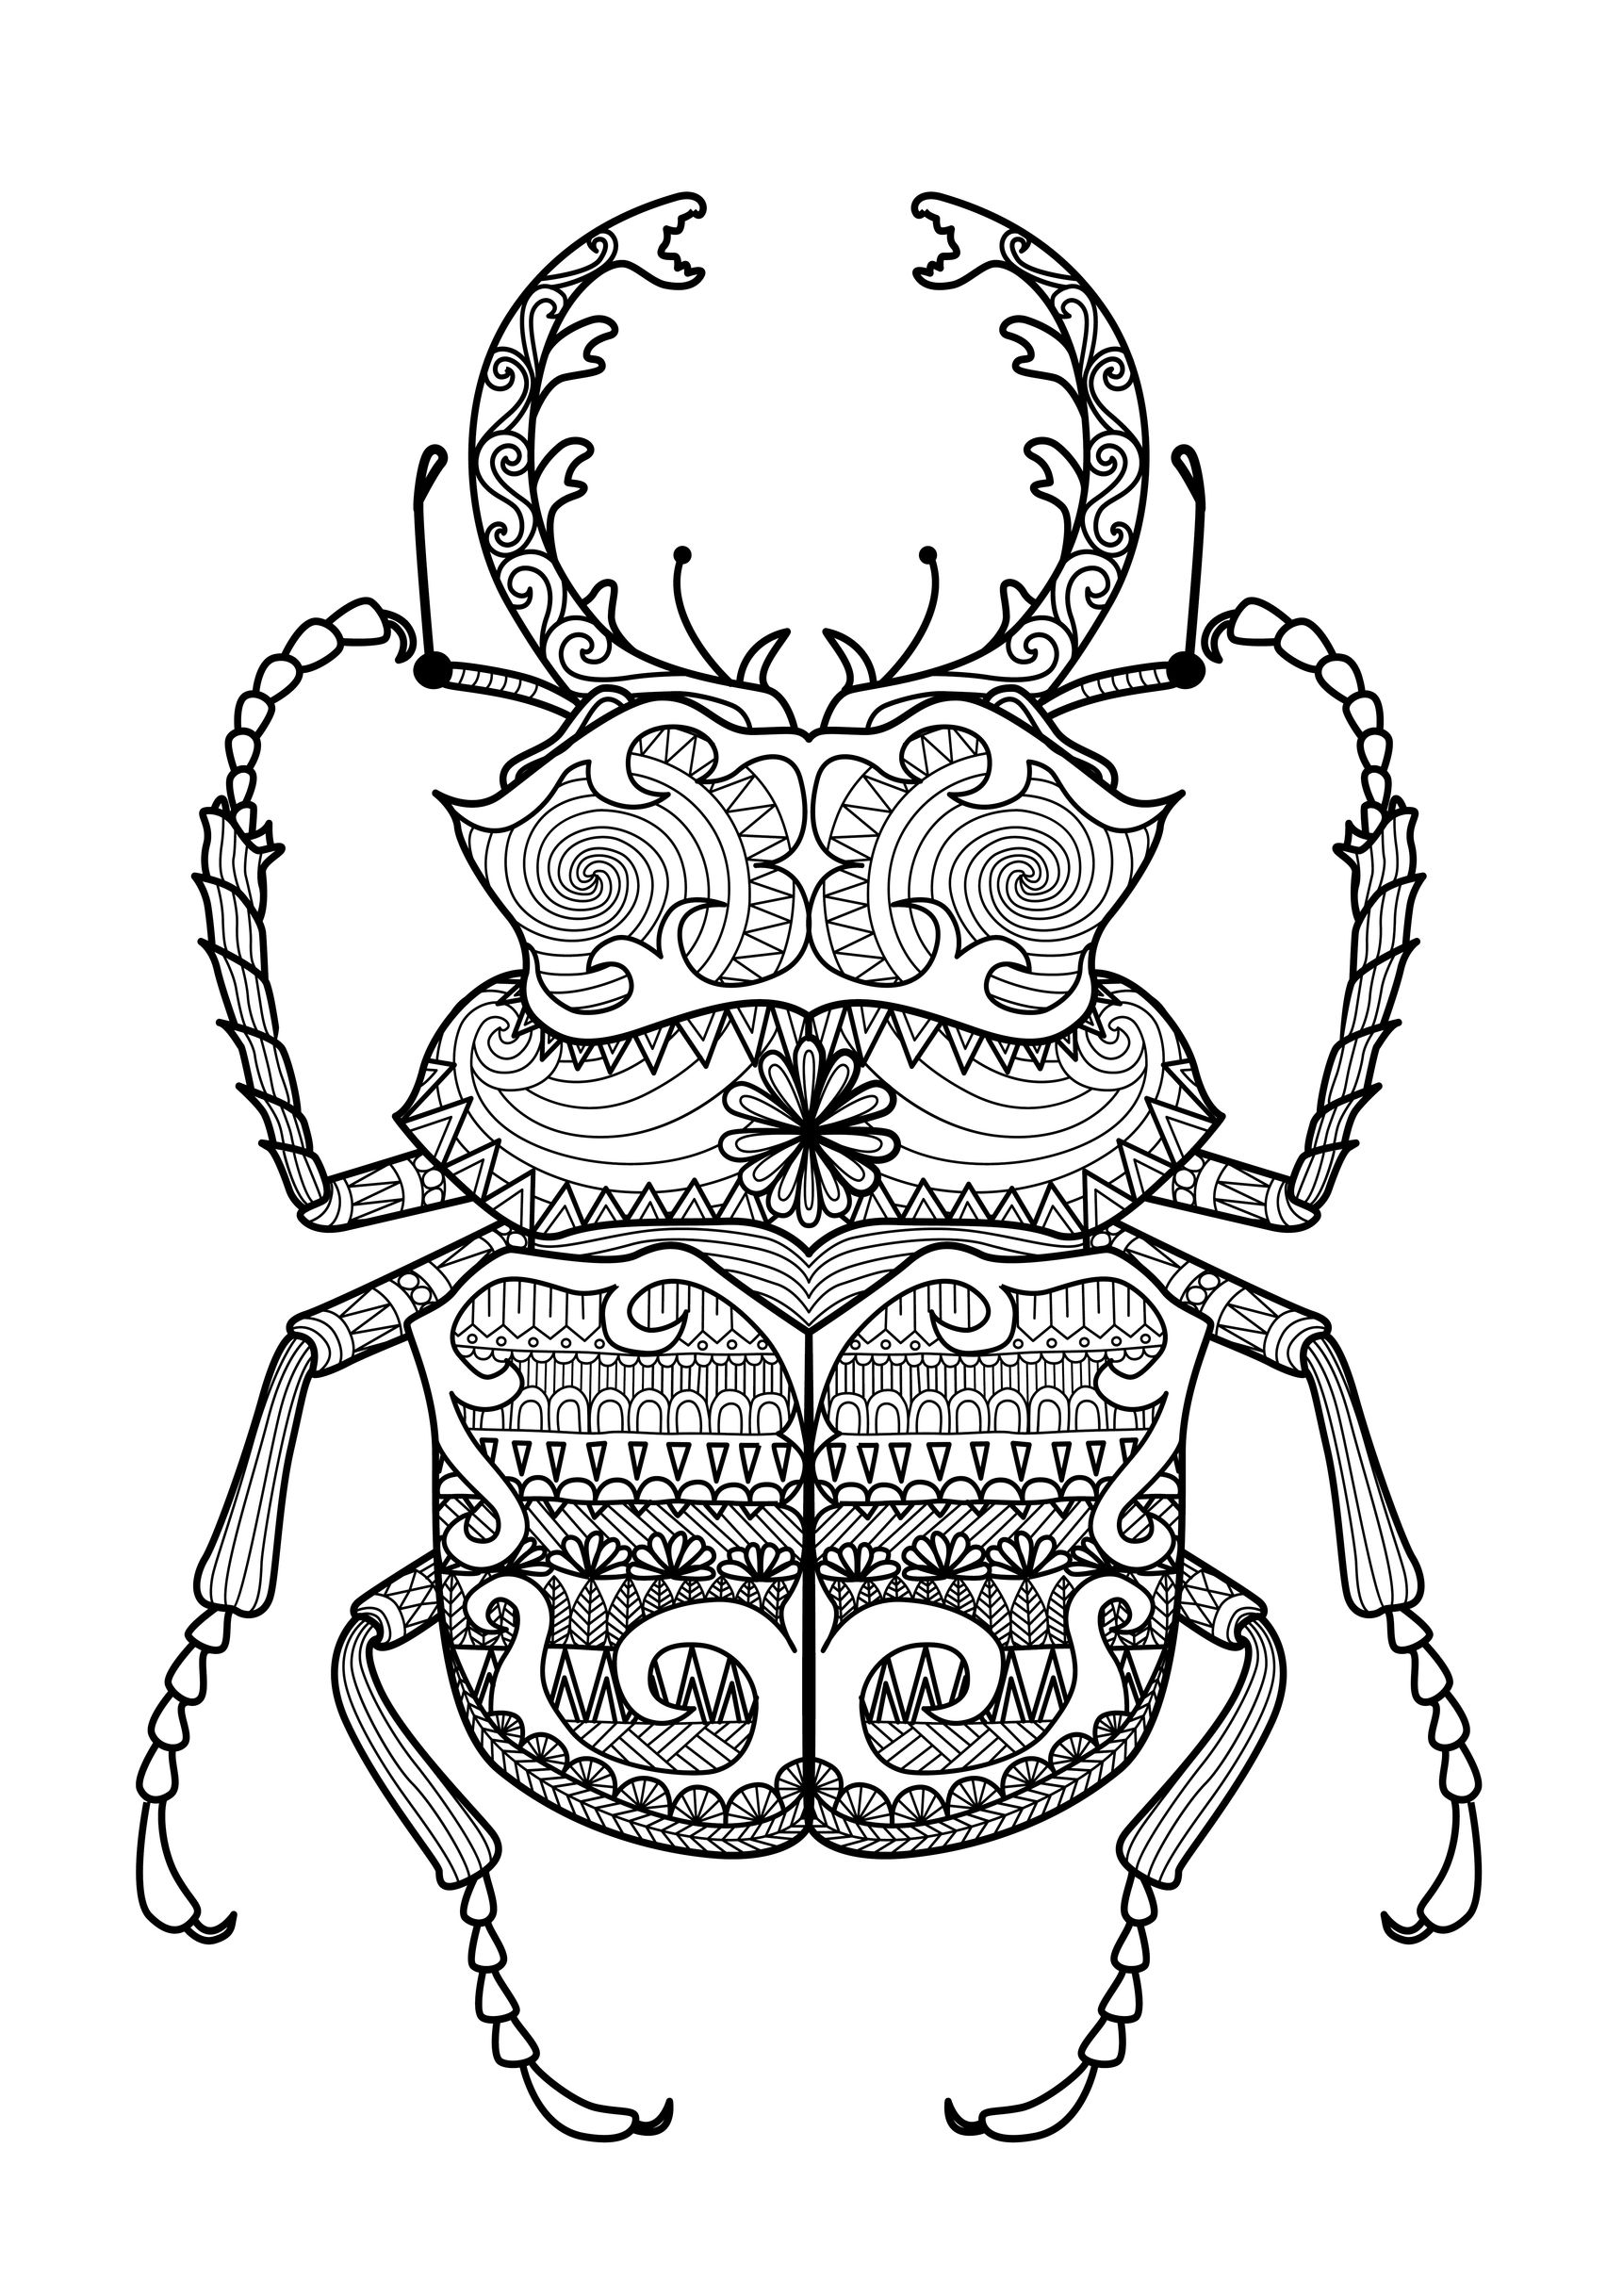 Coloriage Zentangle de scarabée, par Bimdeedee (source : 123rf)